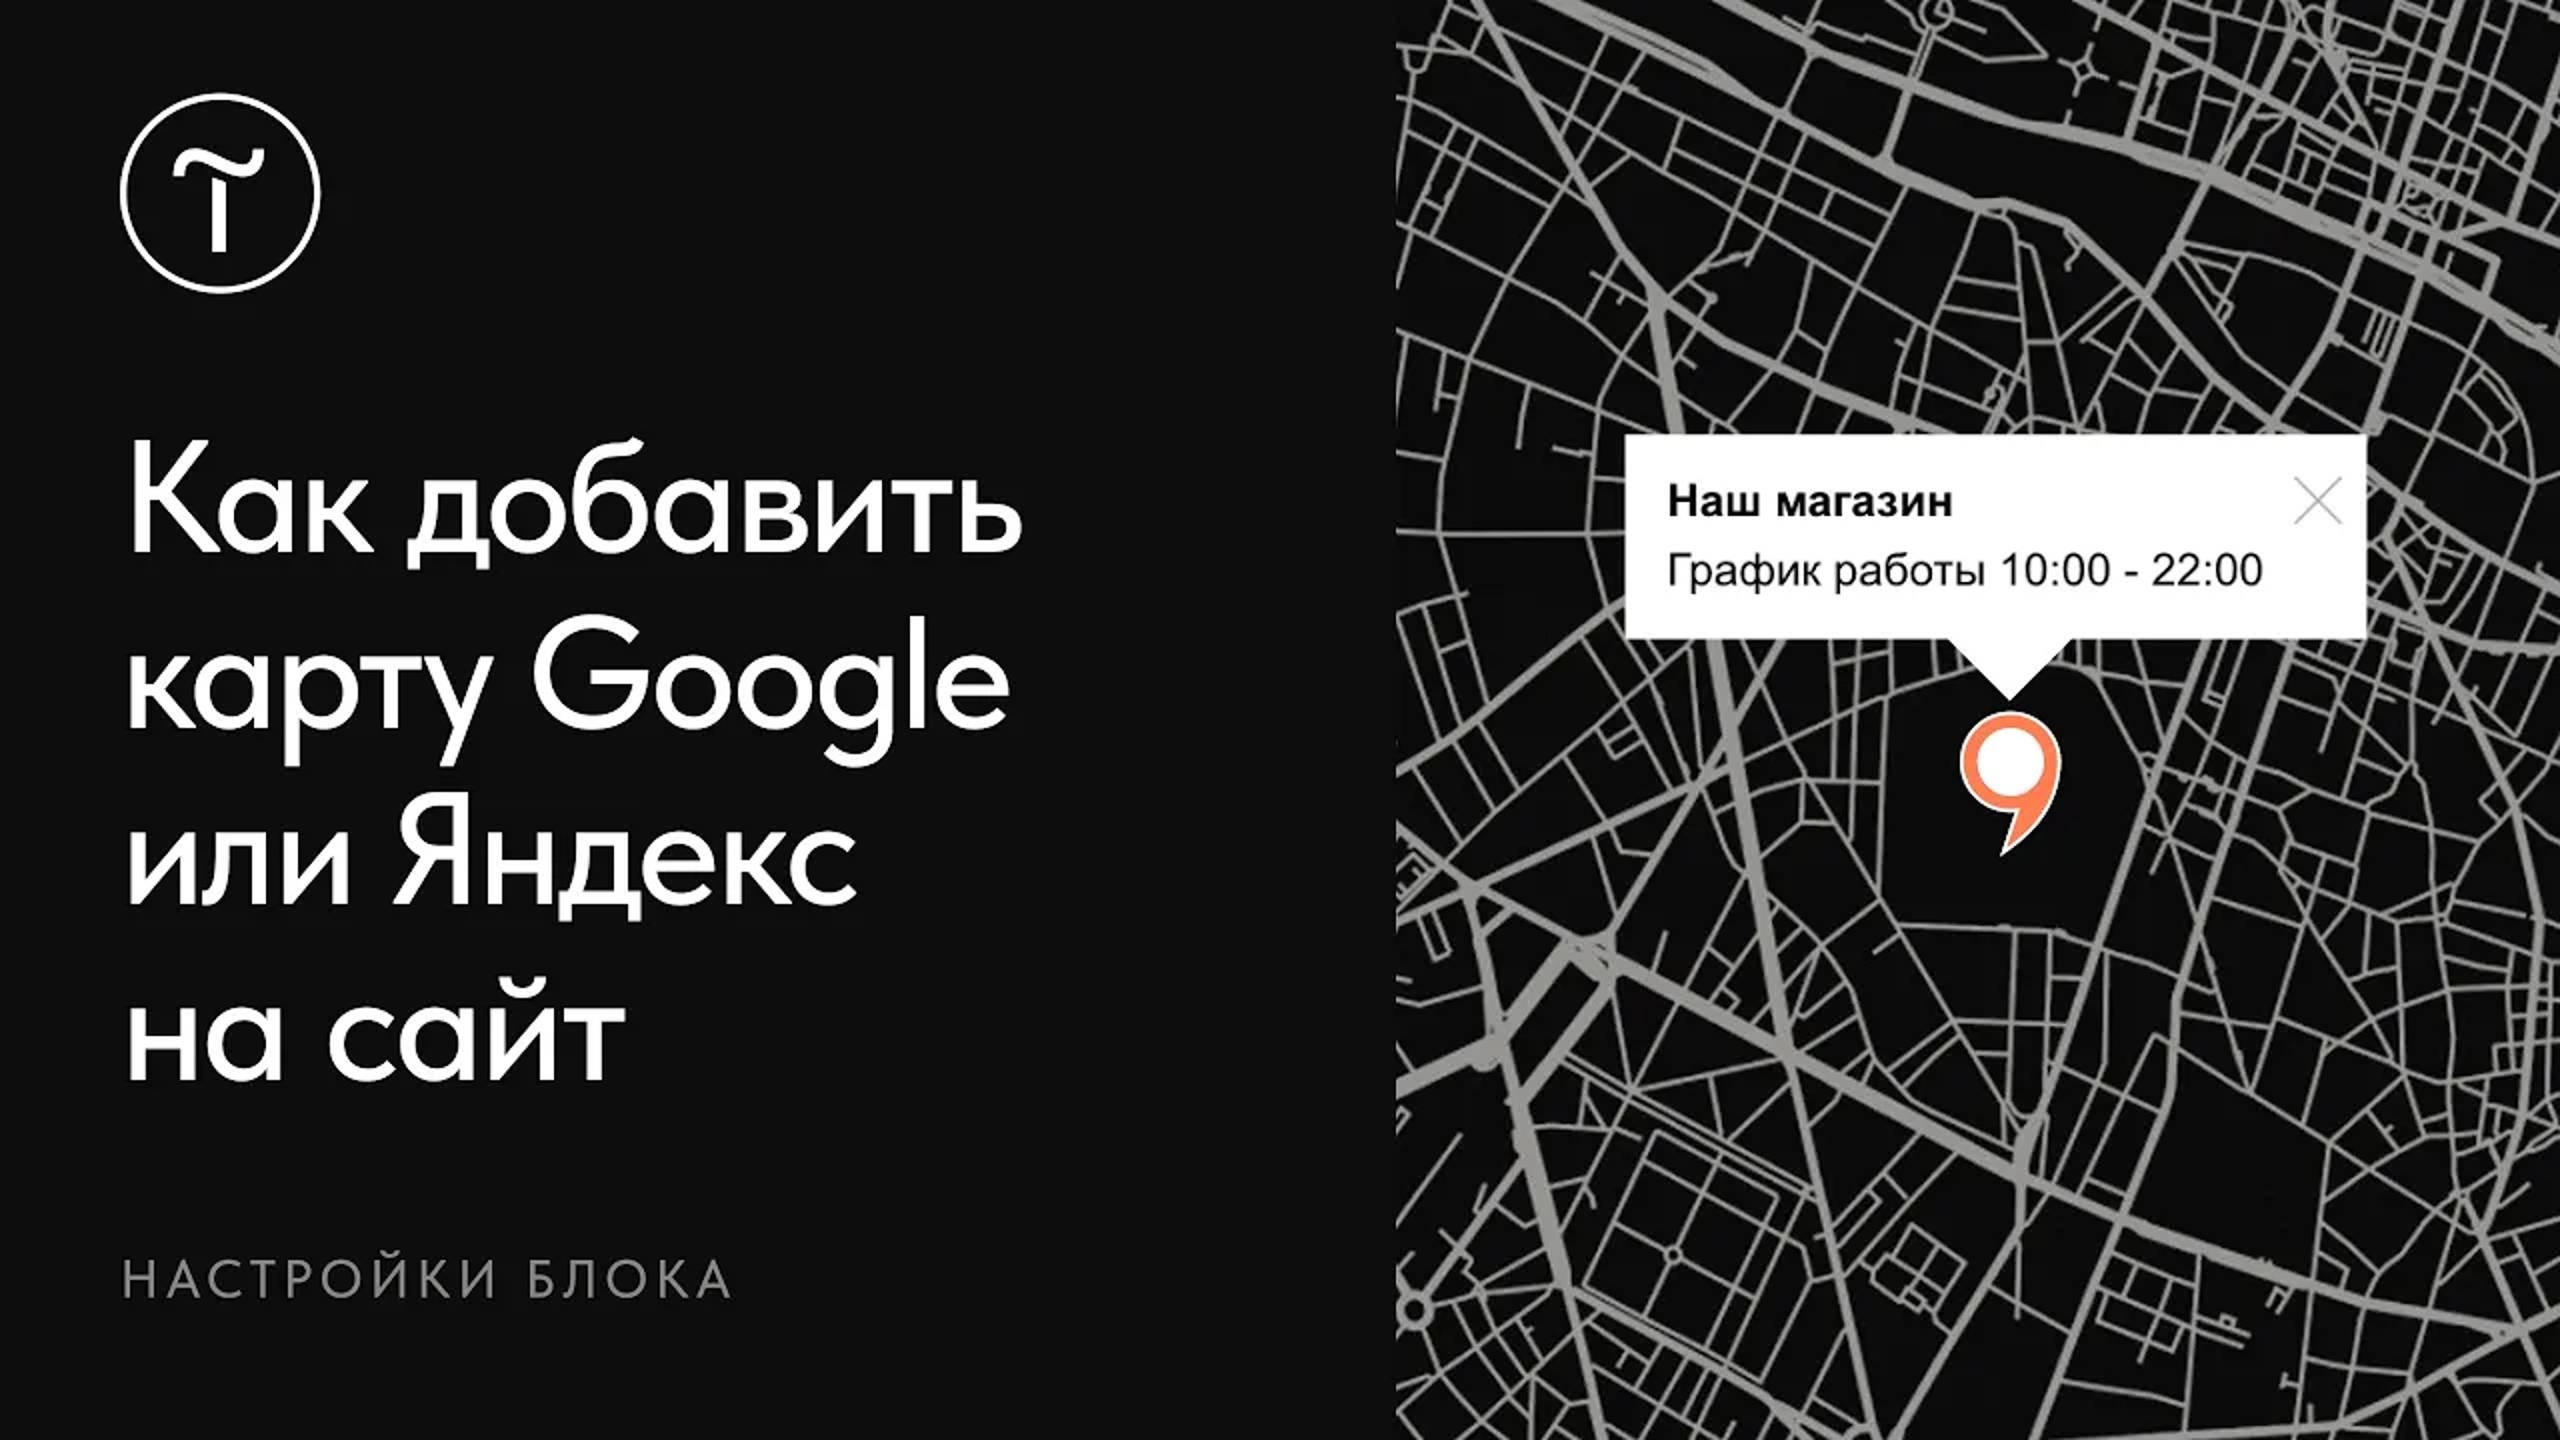 Как добавить карту Google или Яндекс для сайта на Тильде